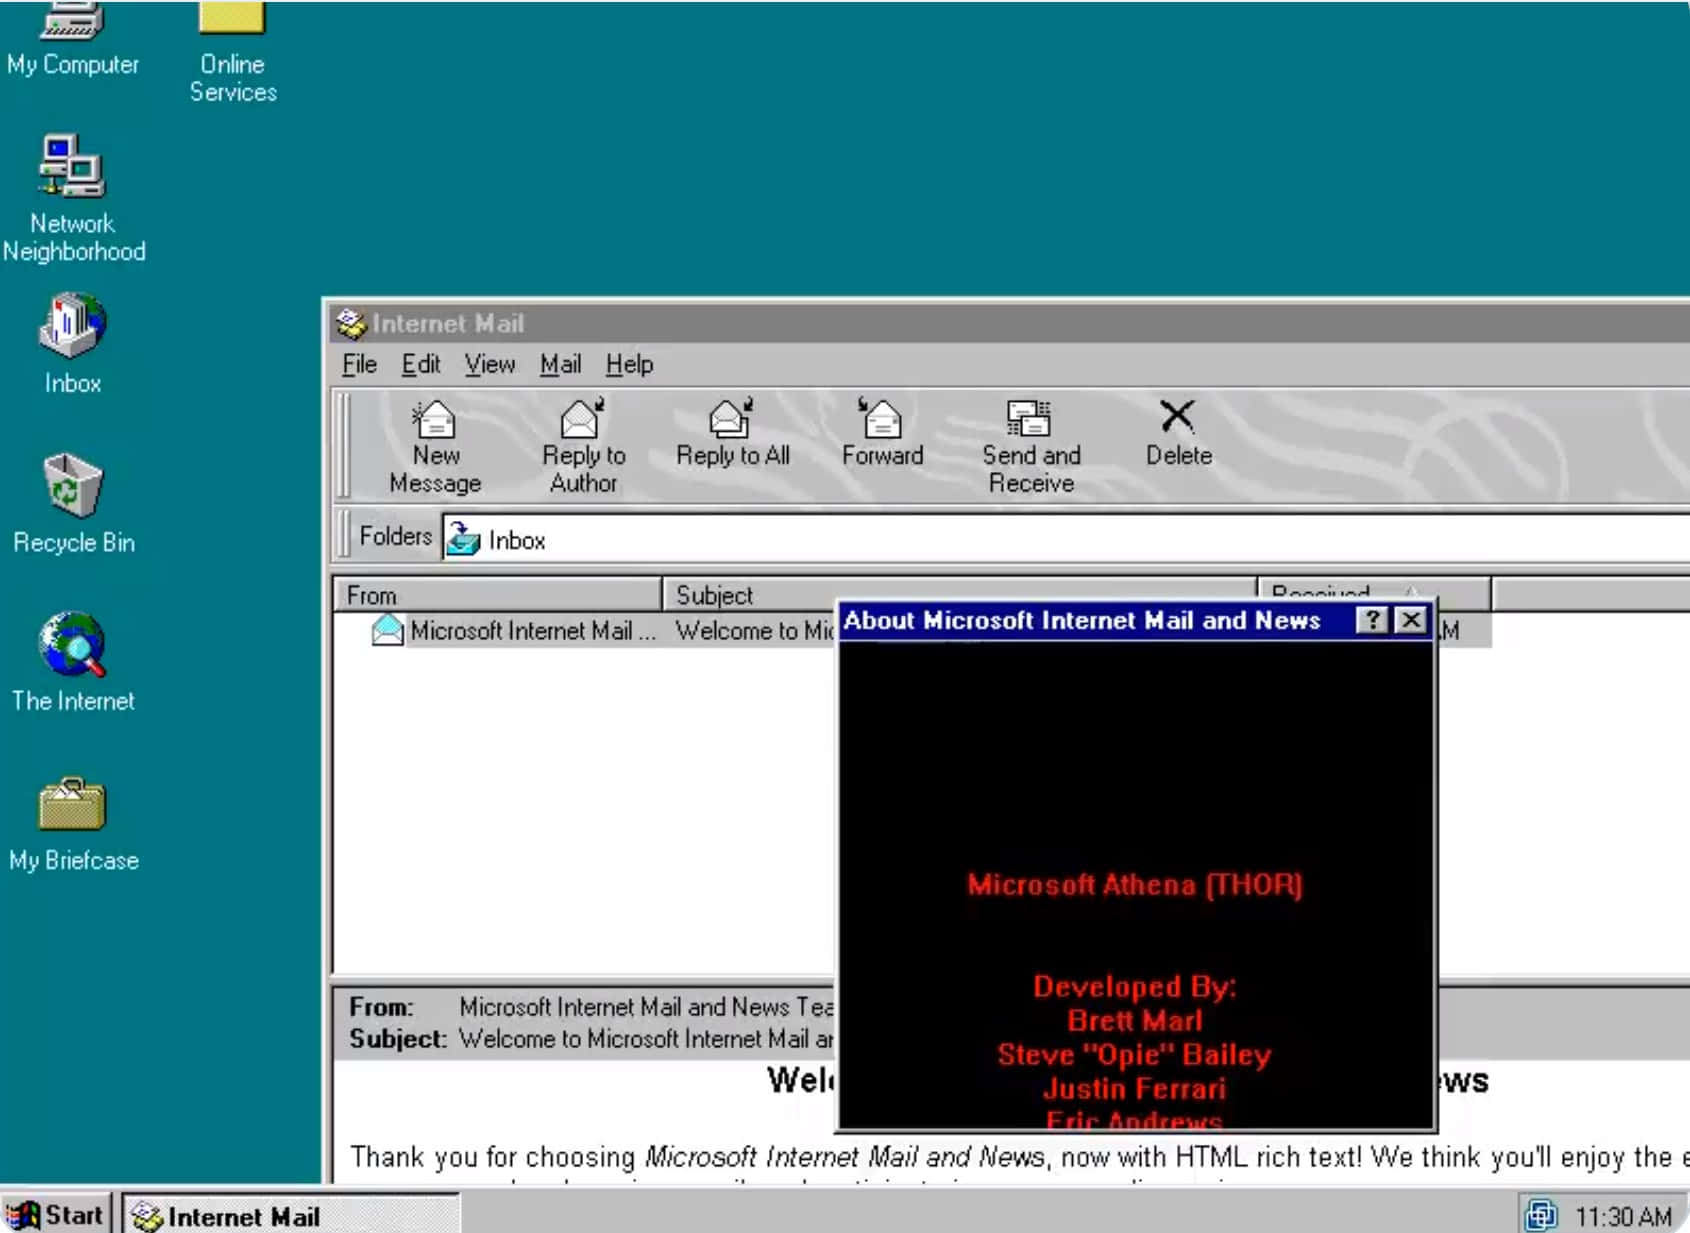 Desbloqueandolas Posibilidades De Windows 95.